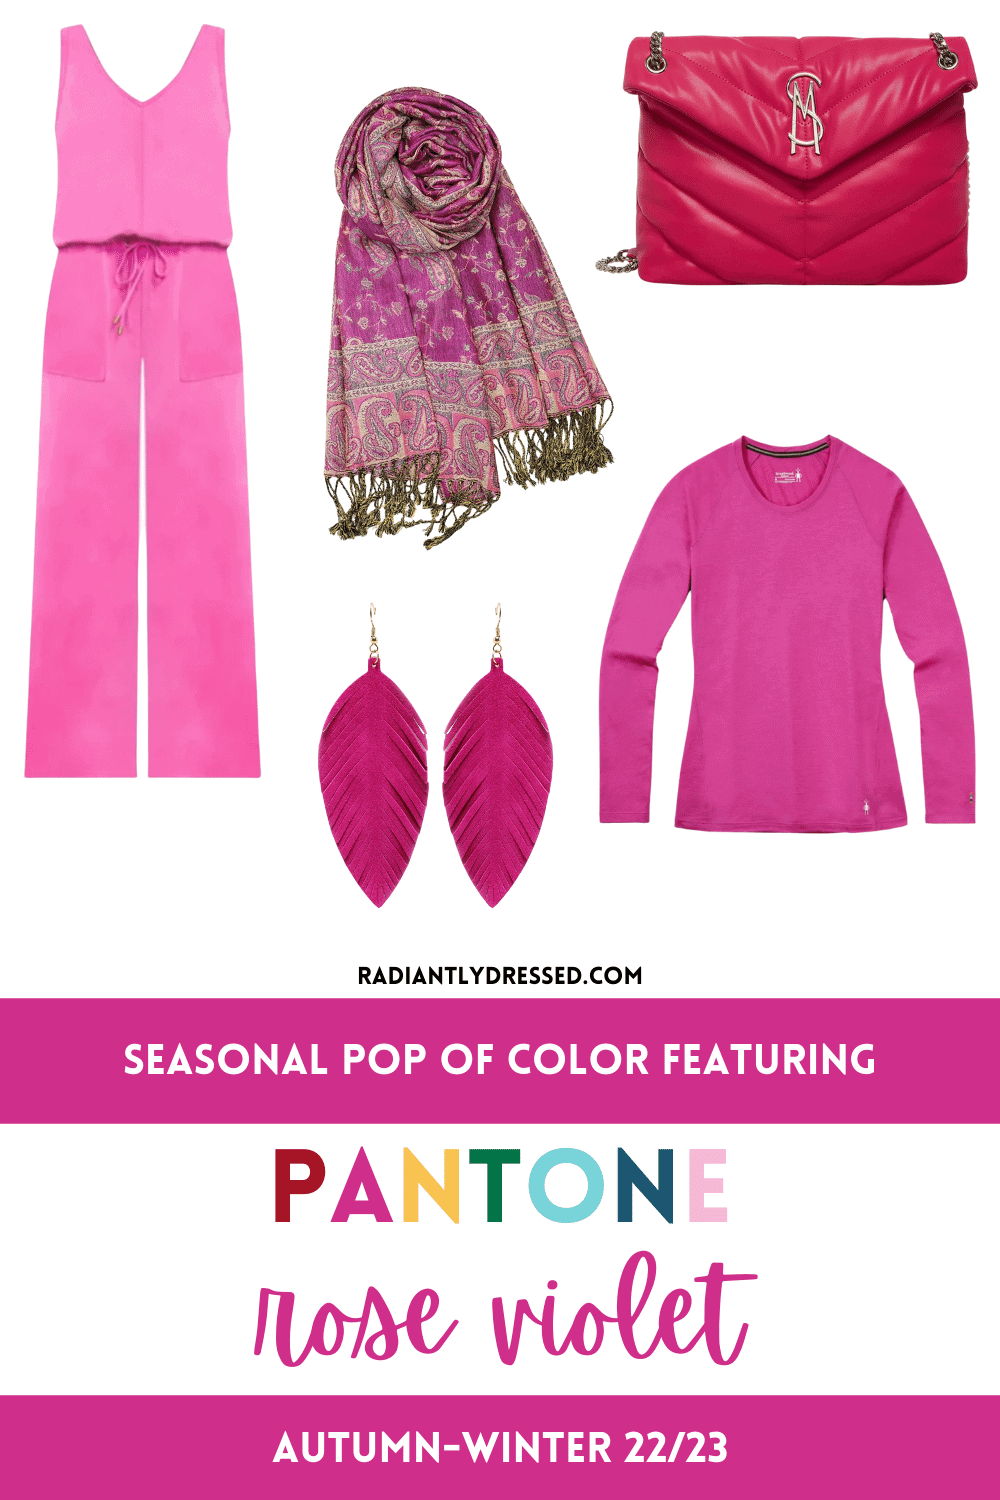 Pantone Rose Violet Clothing 